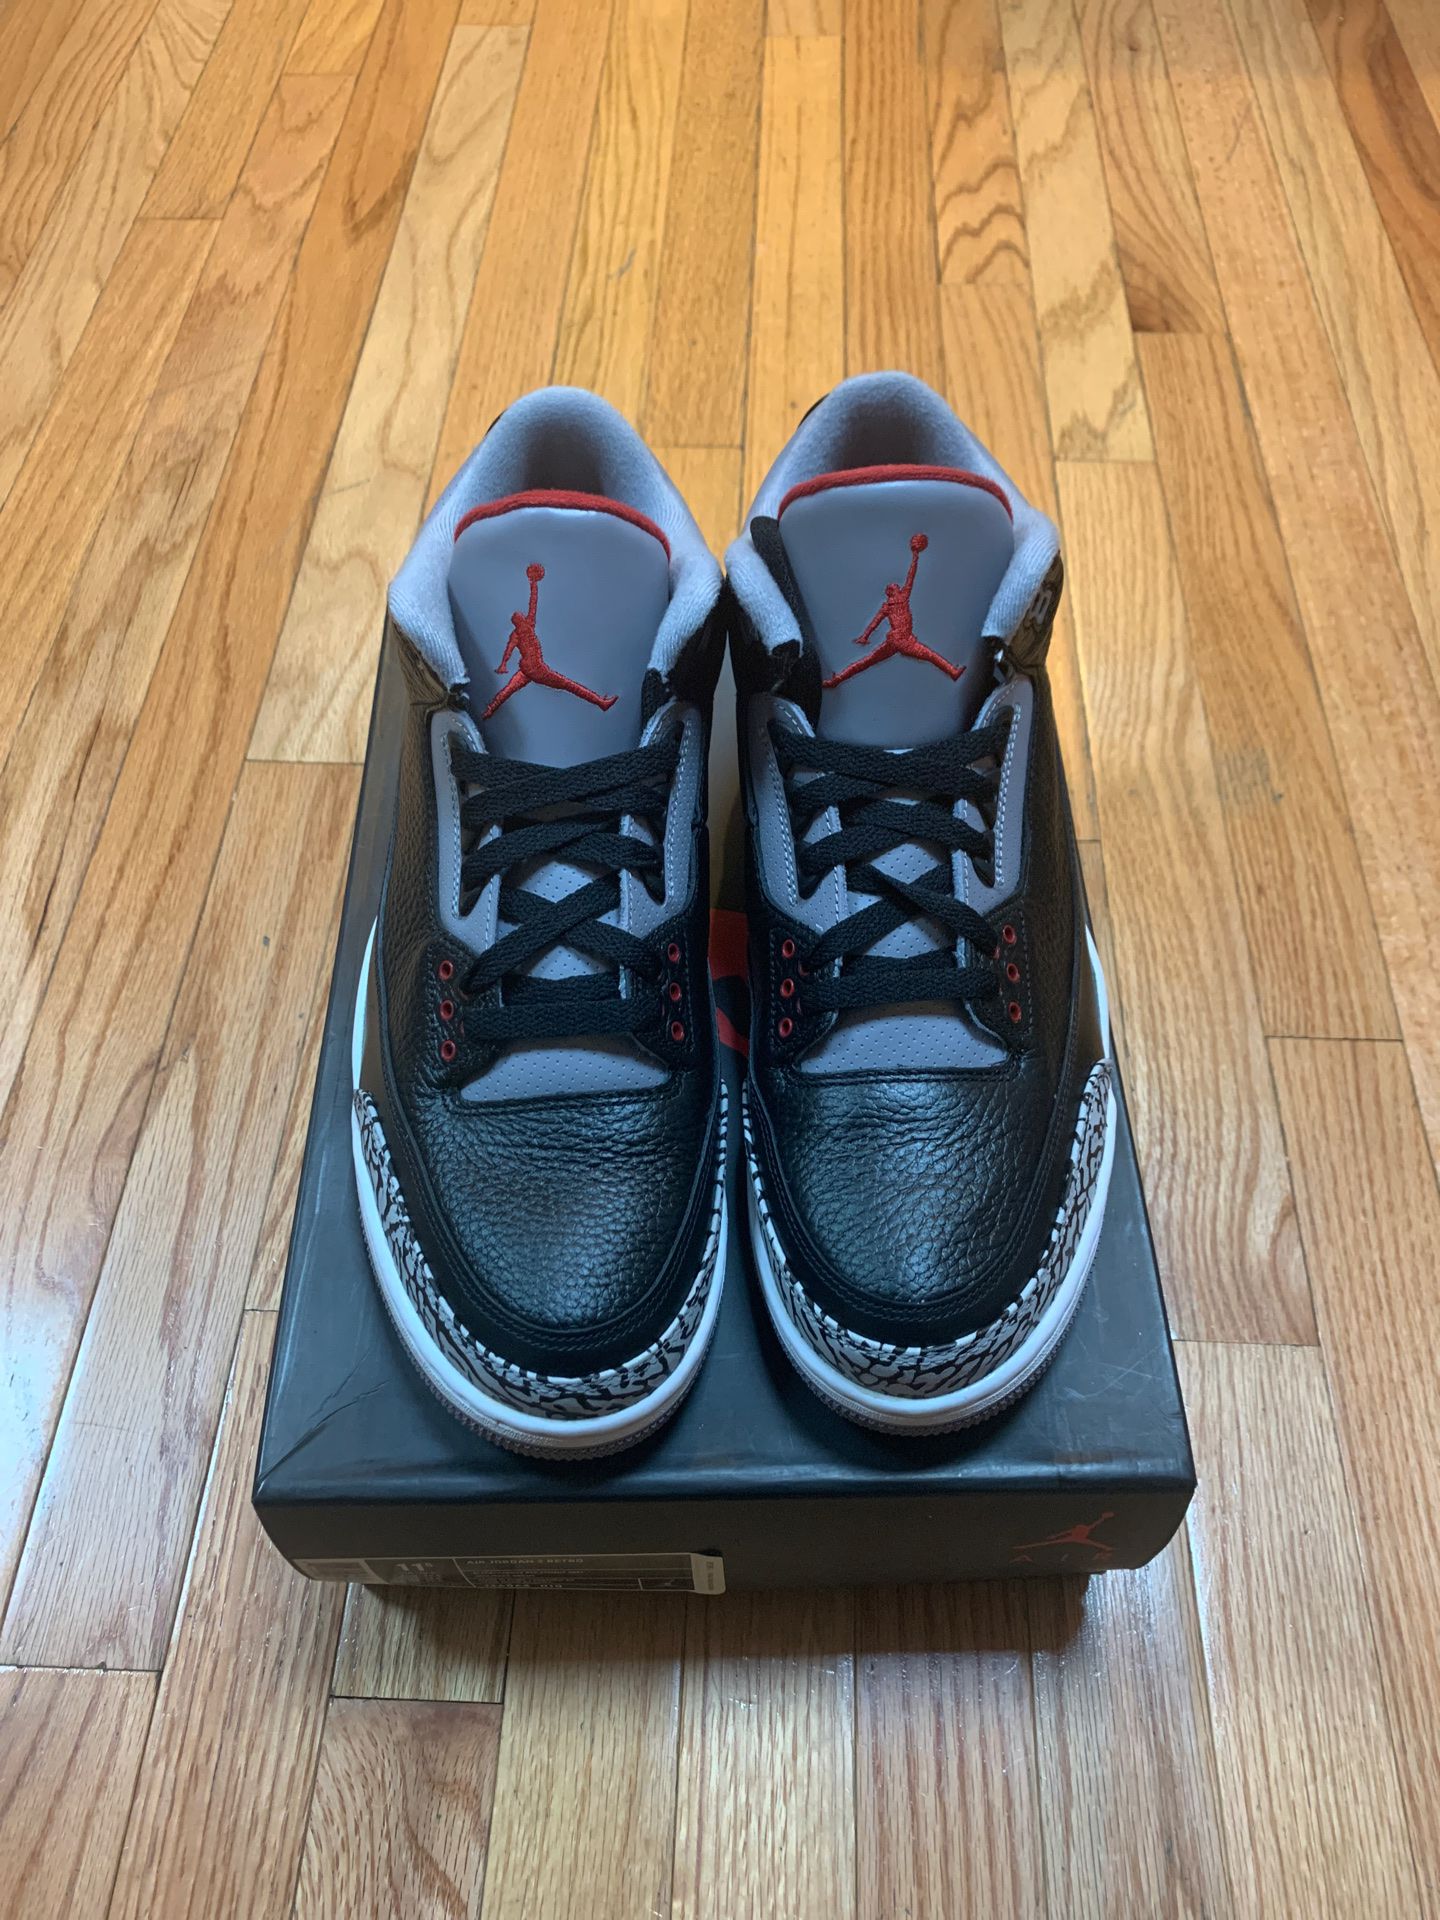 Air Jordan 3 Retro “Black Cement” Sz 11.5